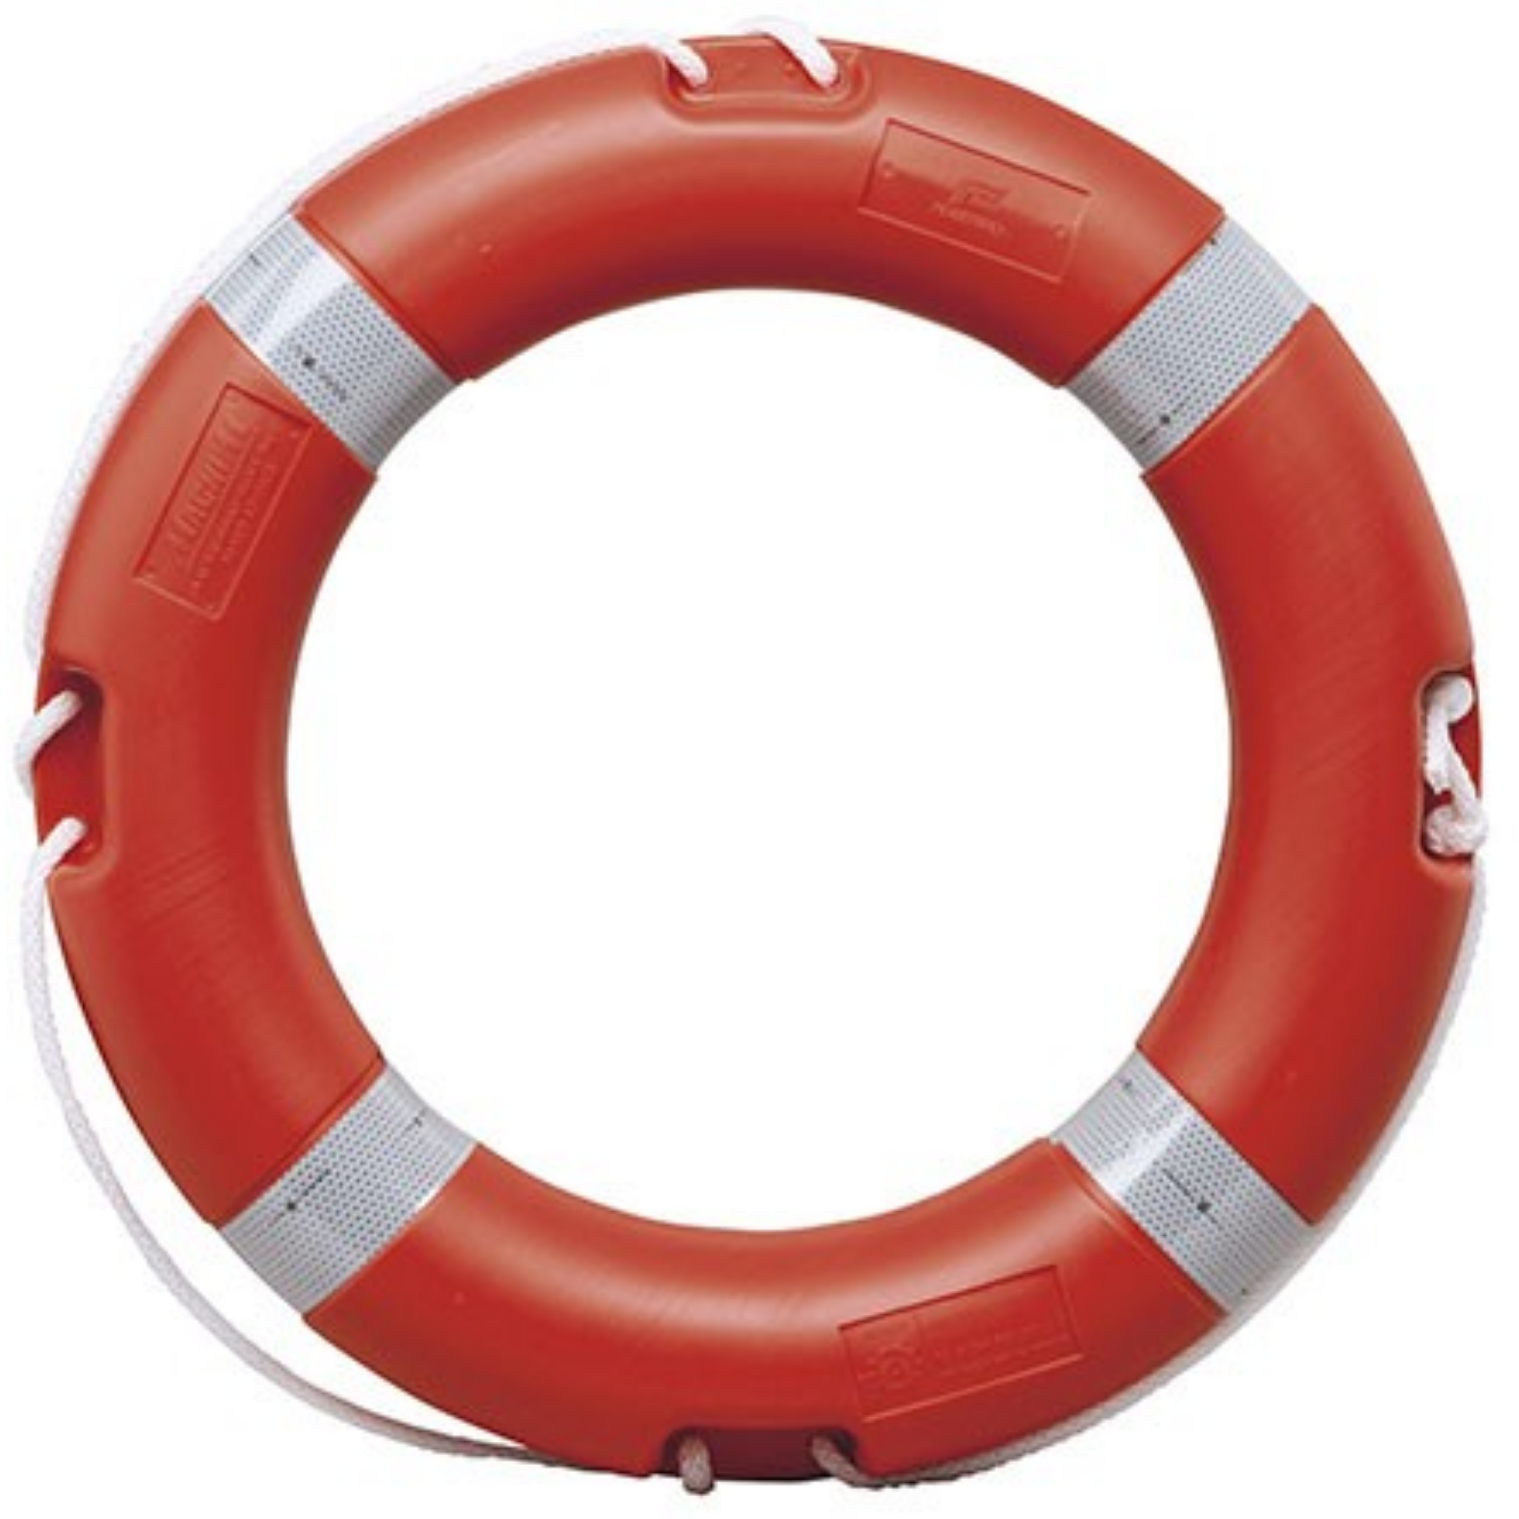 Plastimo Ring Lifebuoy SOLAS 73cm Lifebelt